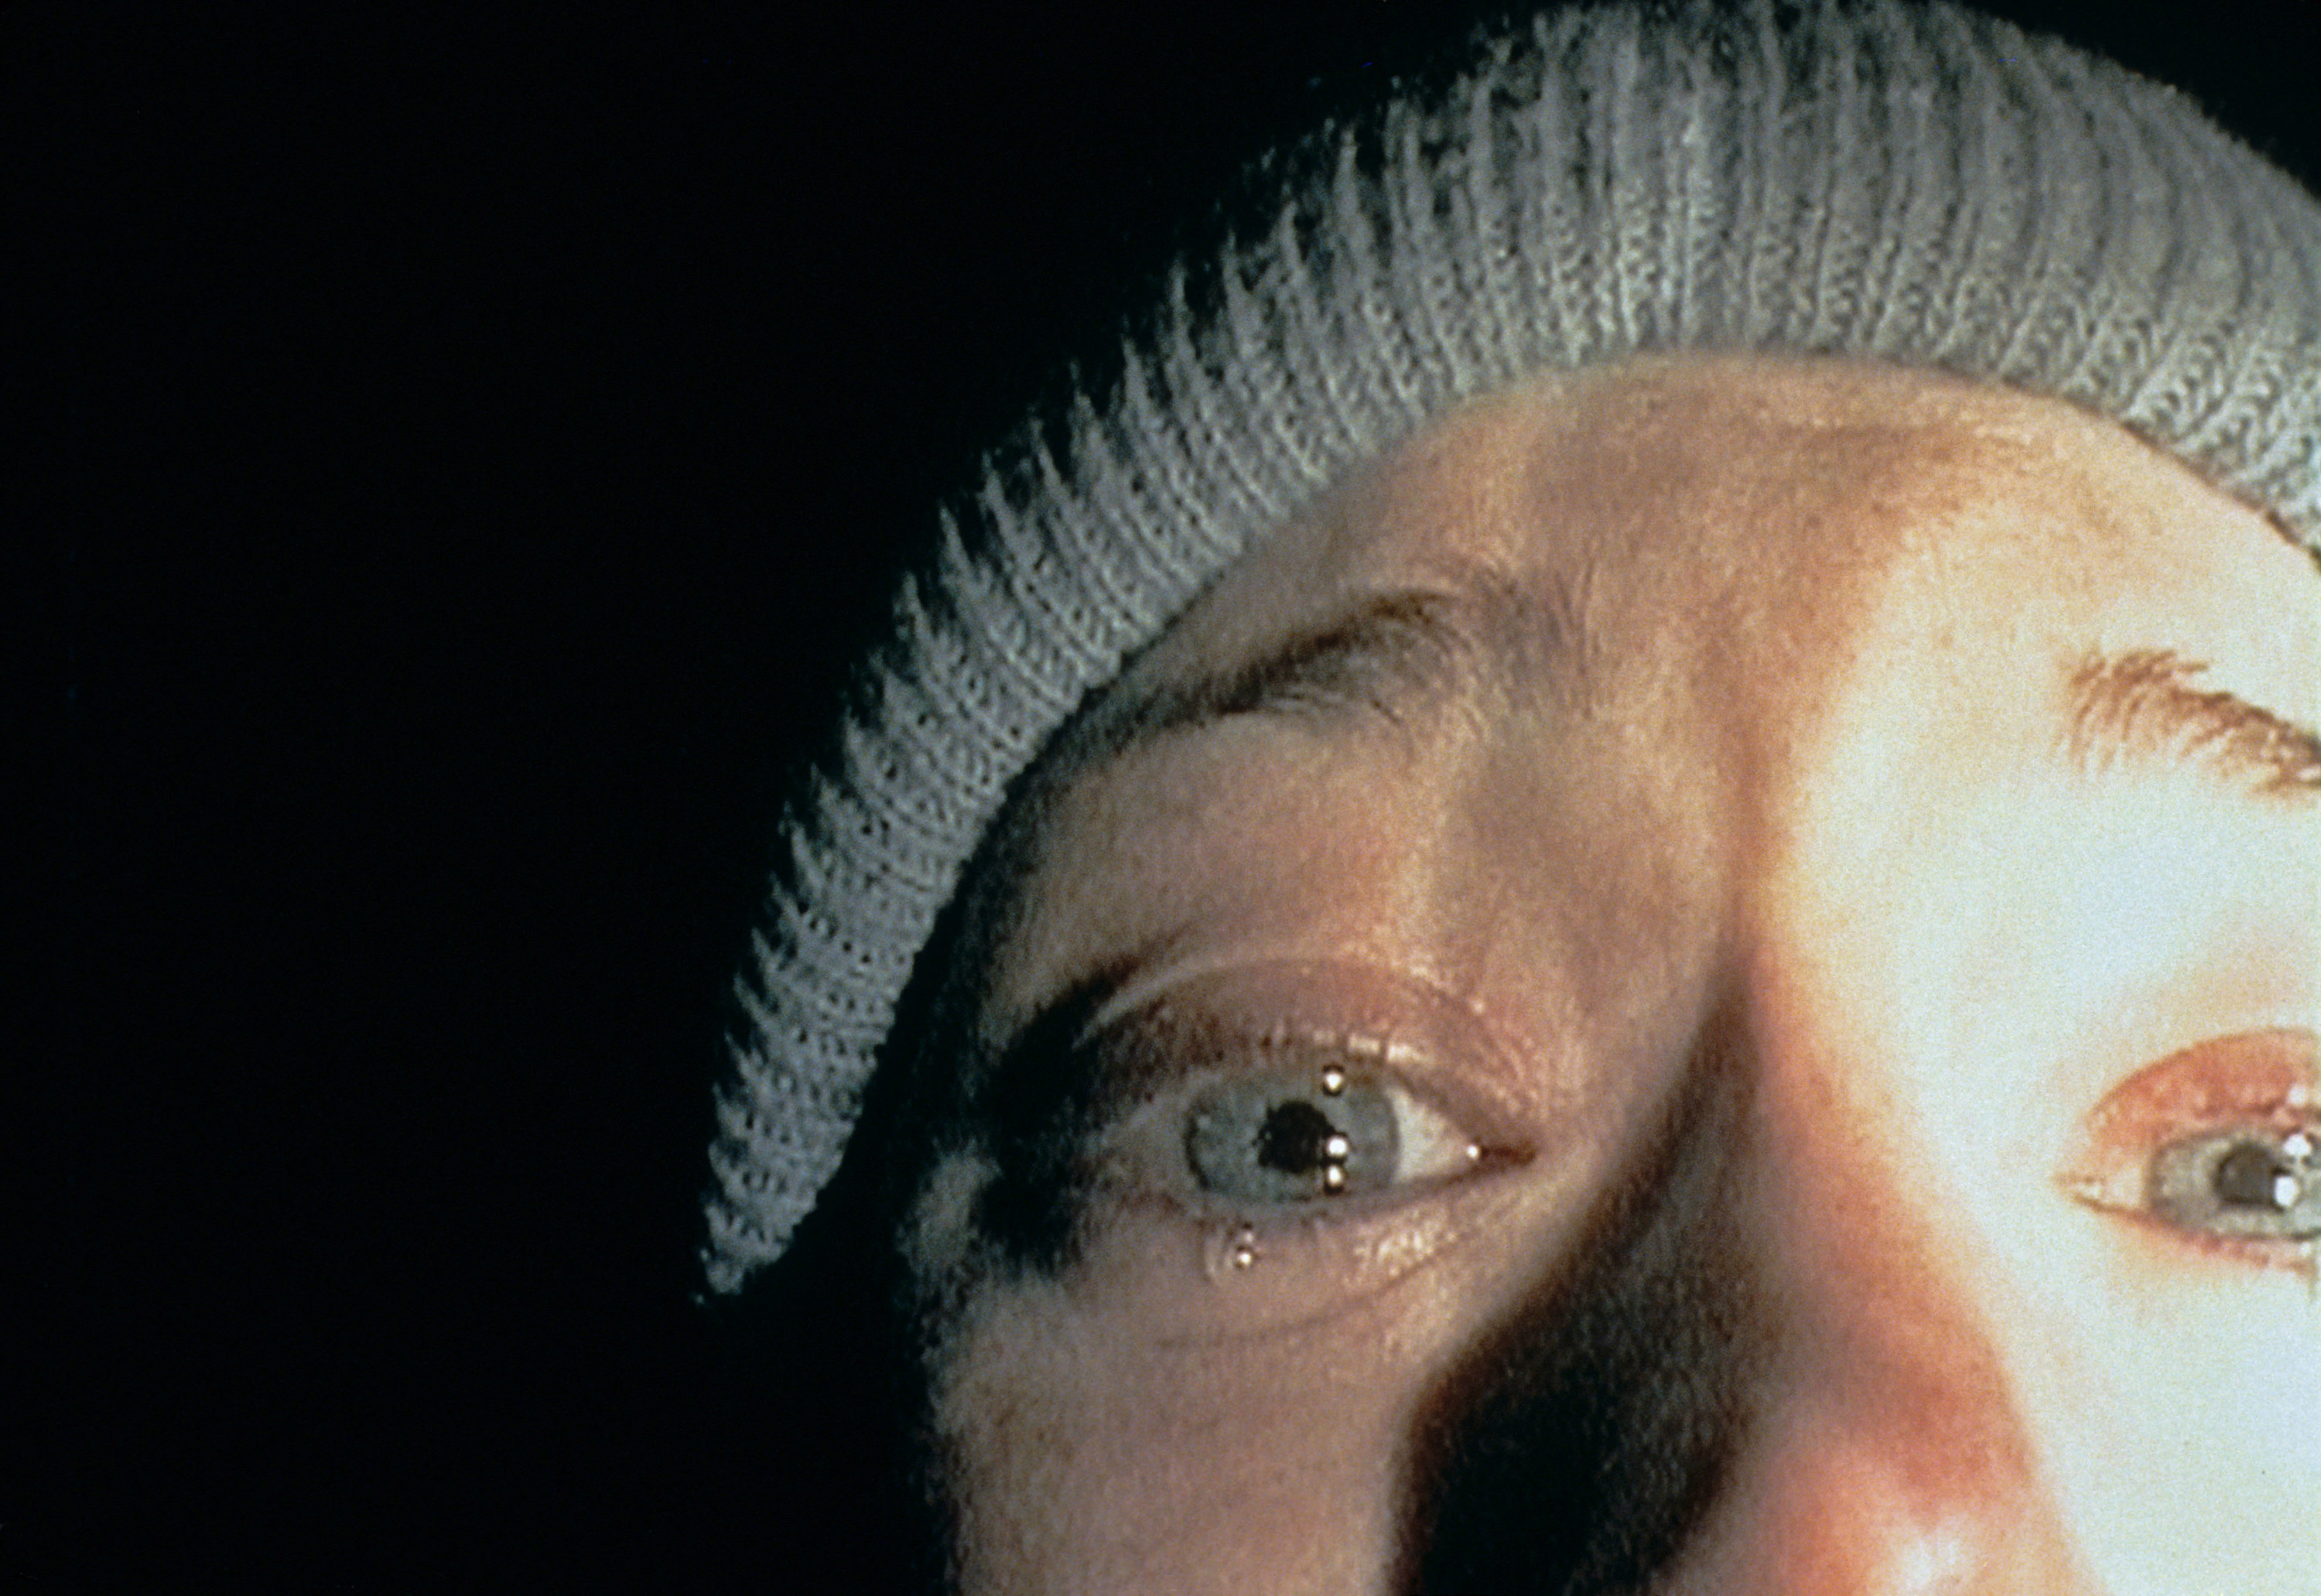 Flashlight-illuminated woman cries in the darkness